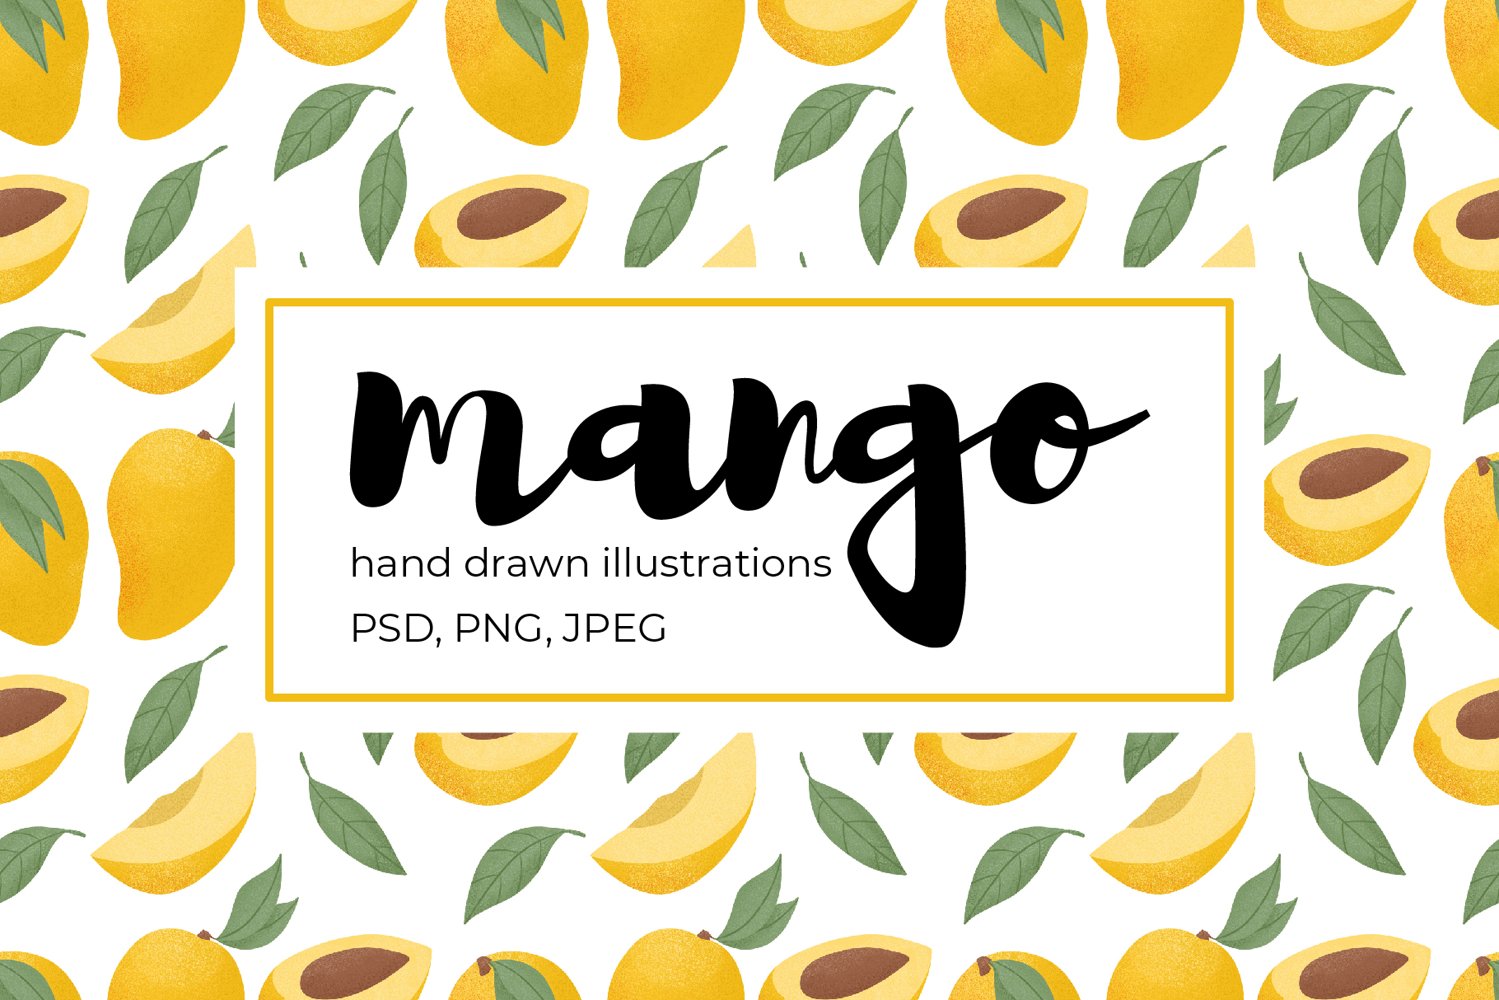 Cover image of Mango hand drawn illustrations.